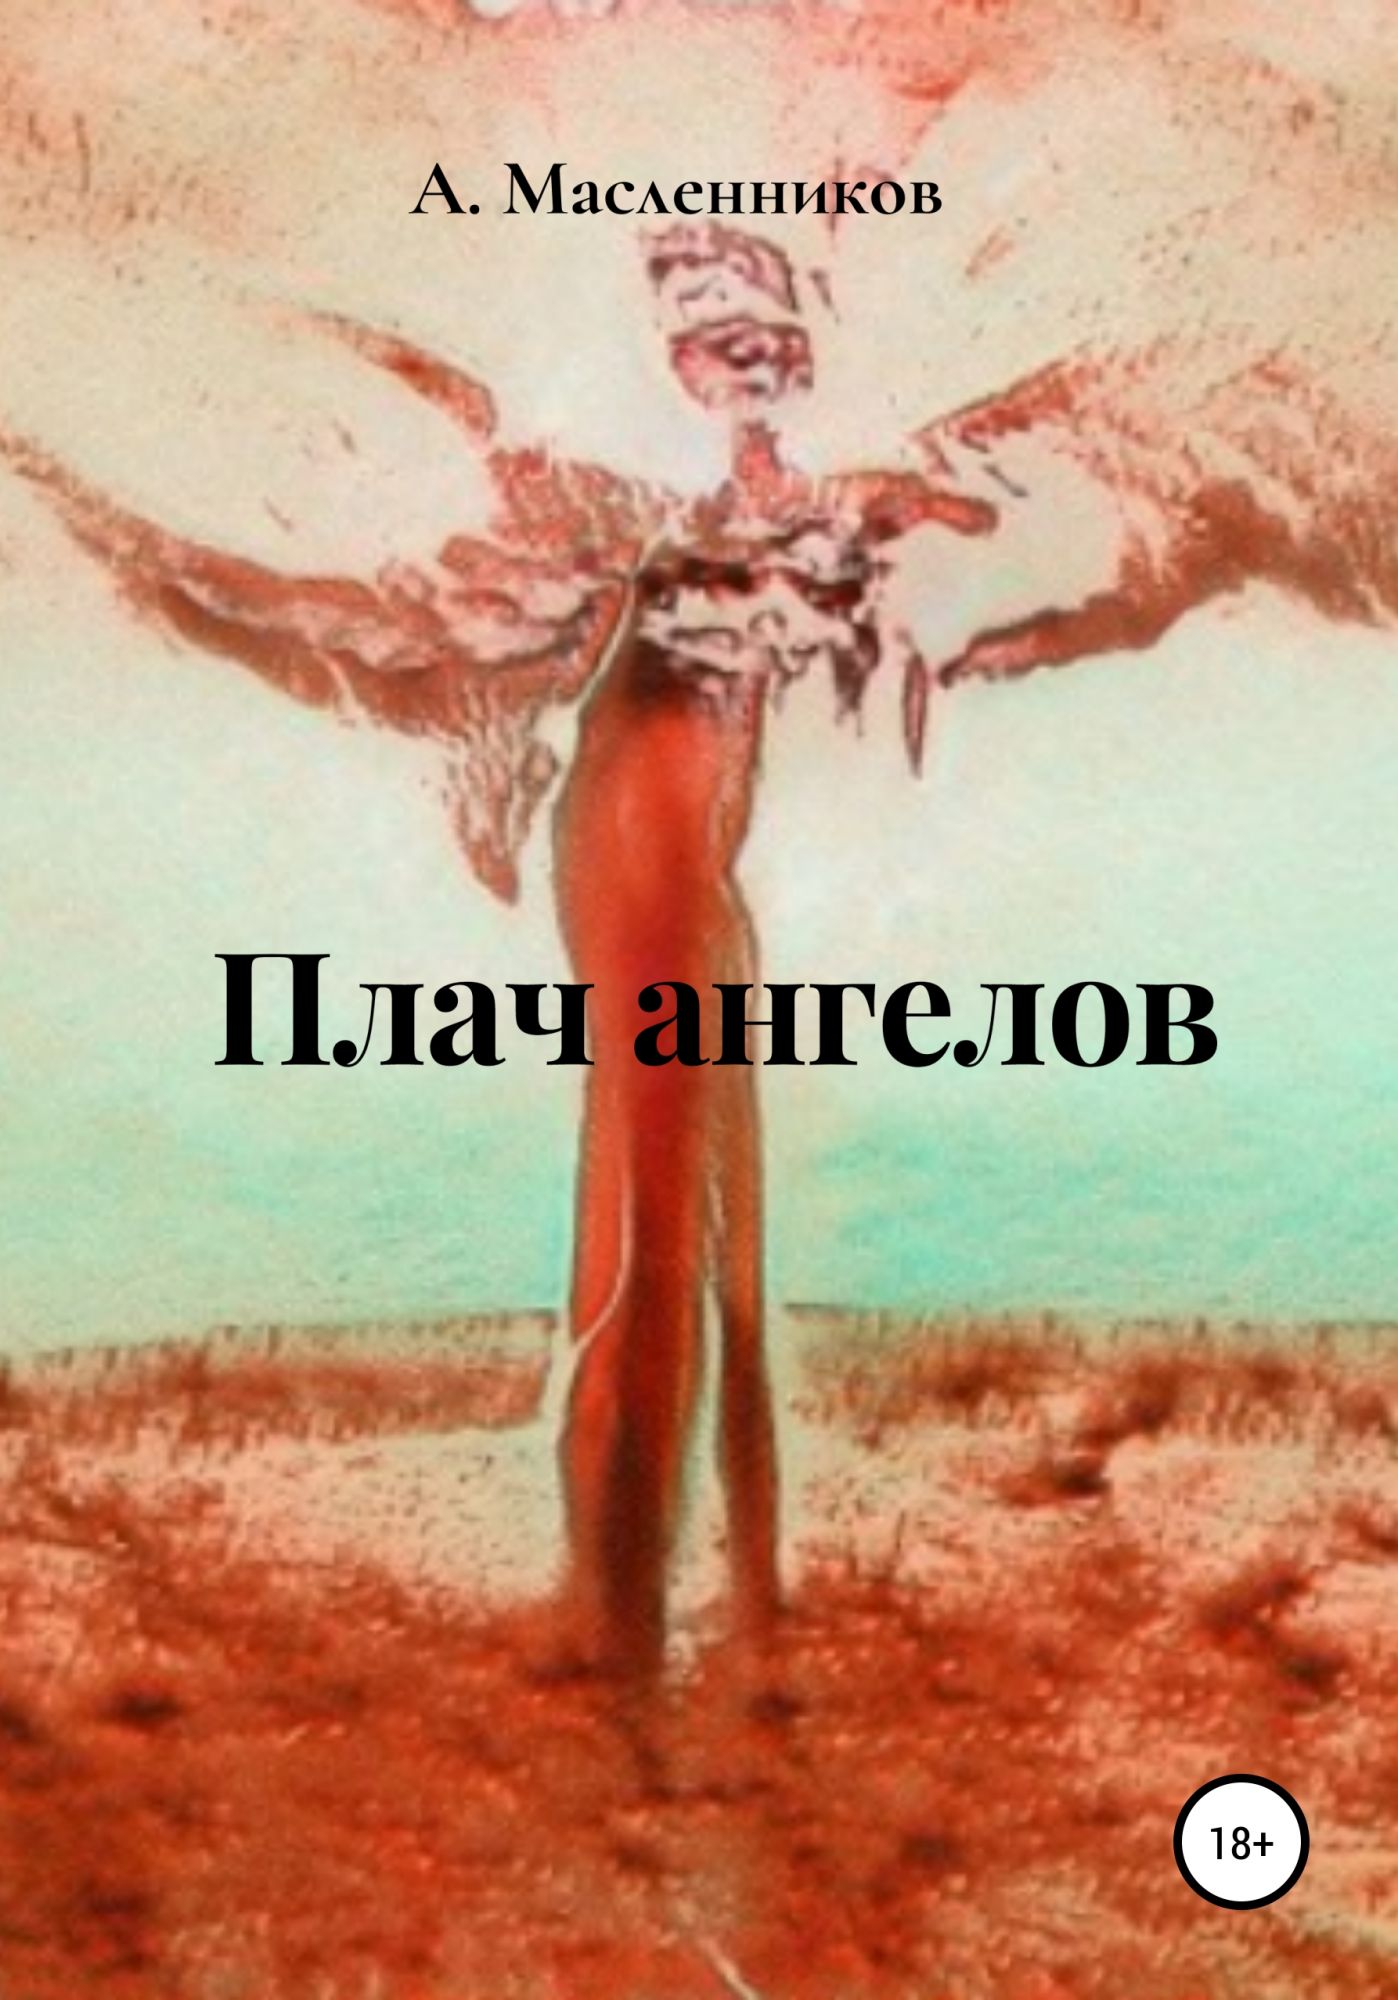 Книга ангелы андреев. Андреев ангел.